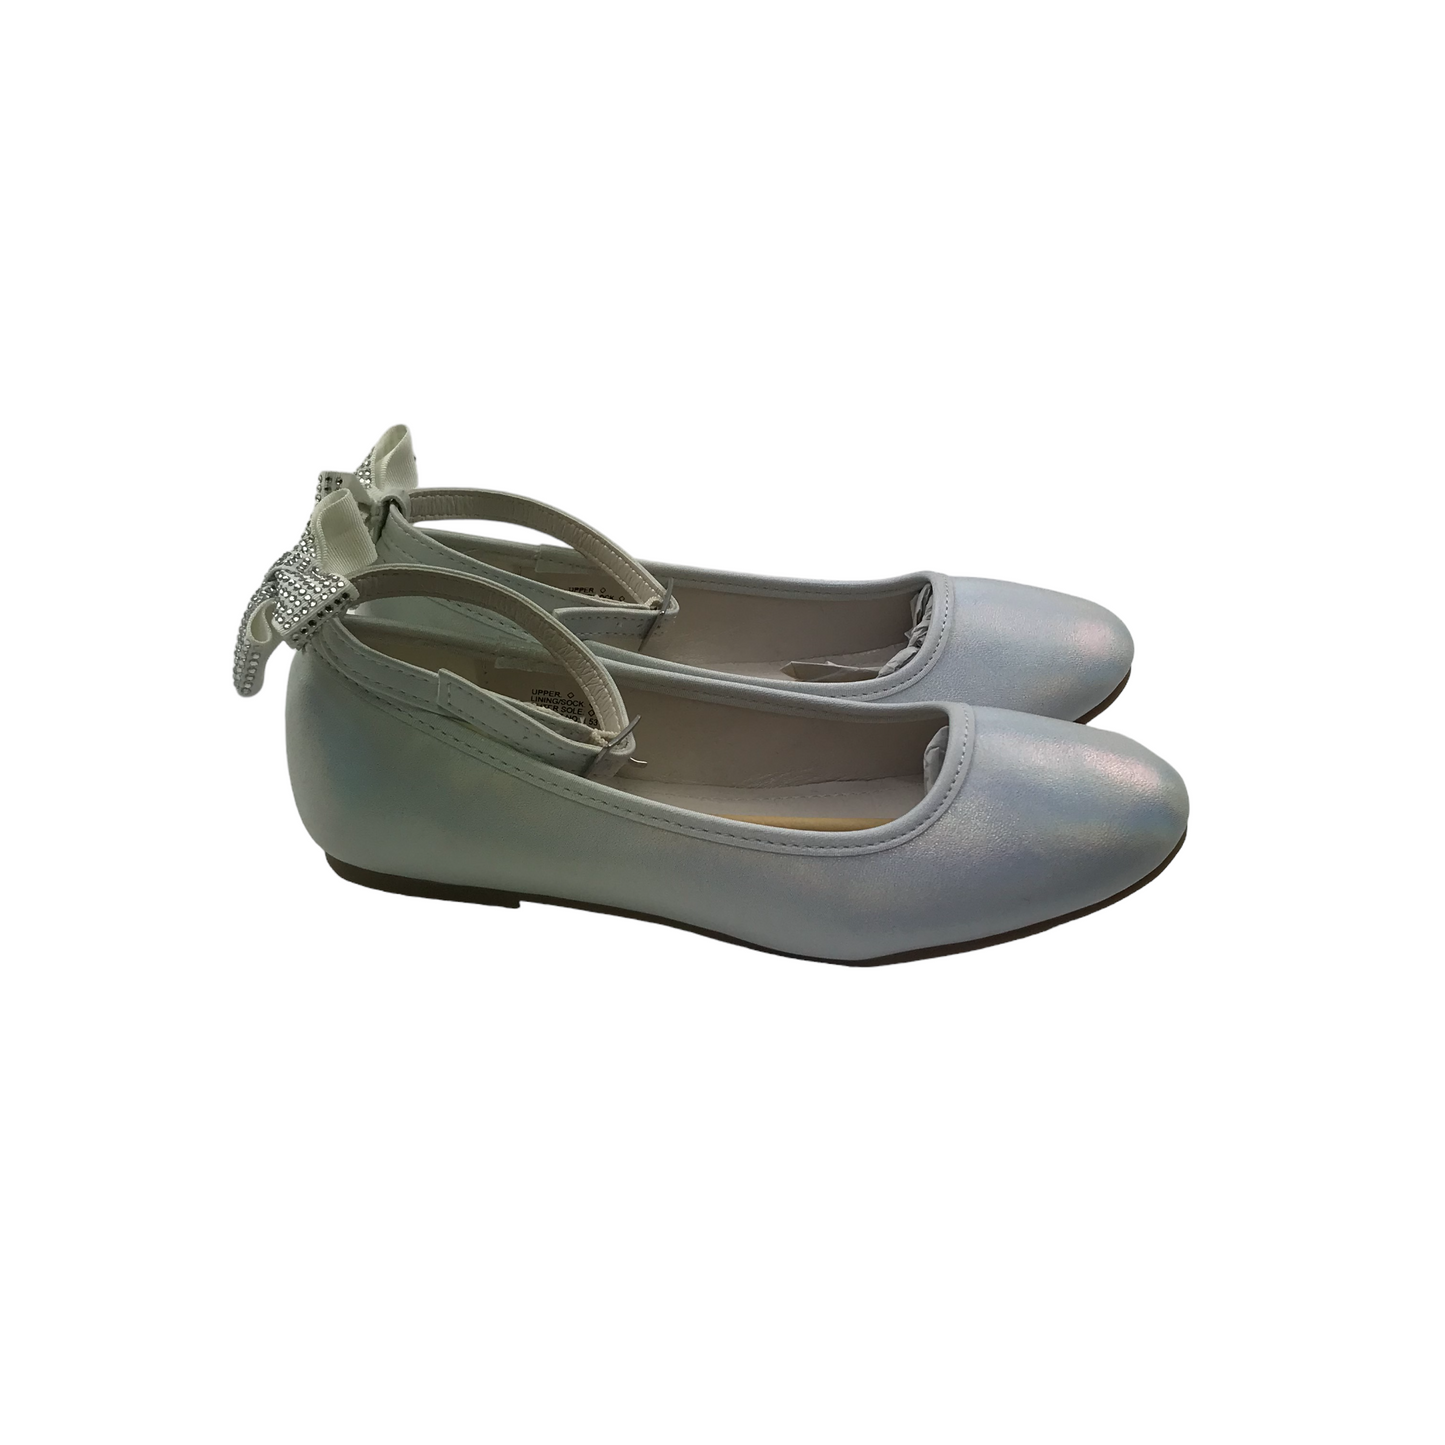 Graceland White Ballet Style Pumps Shoe Size 2